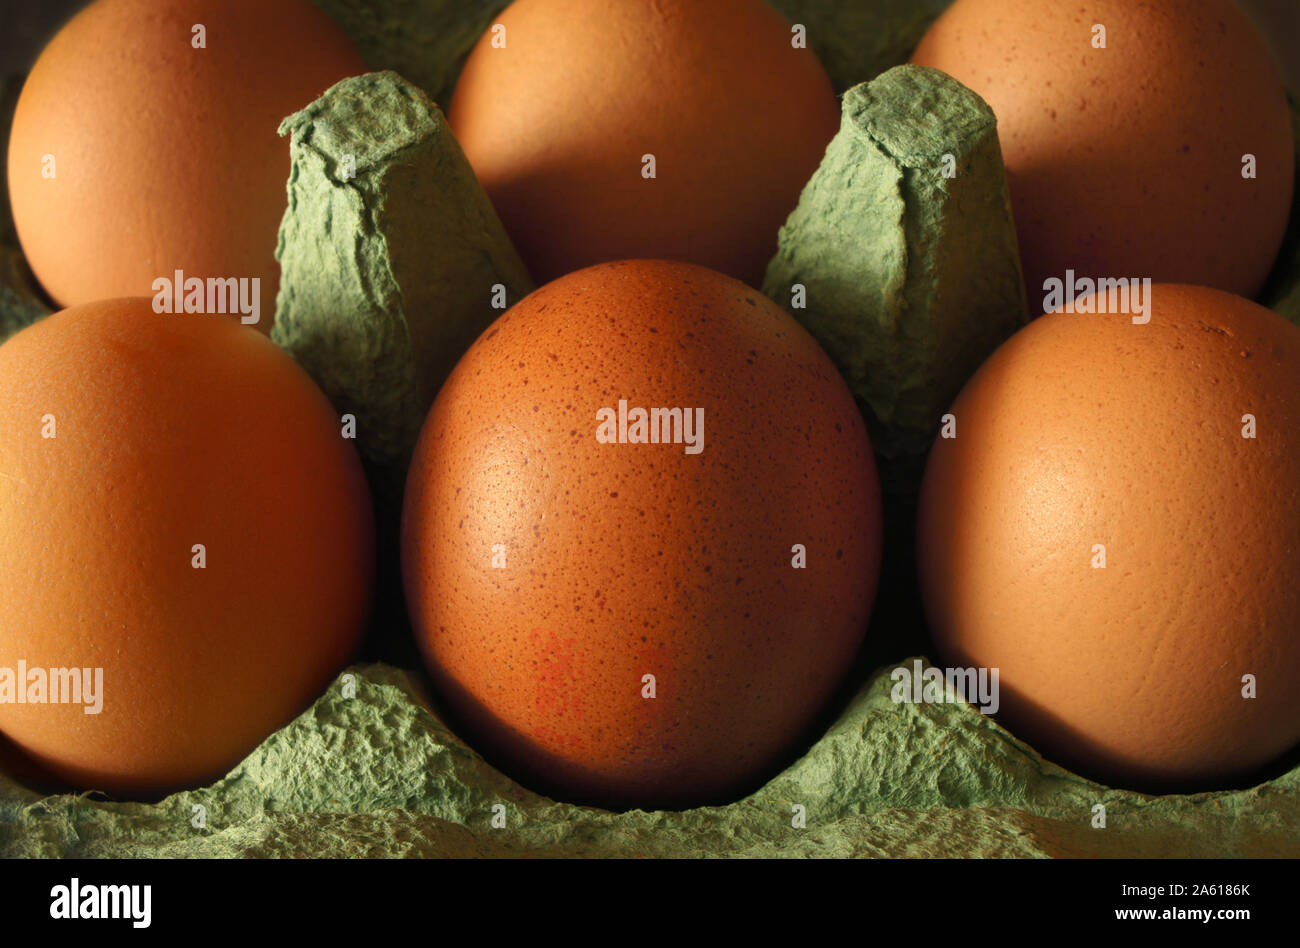 Closeup of Six Brown Free Range Eggs in a Cardboard Egg Box Carton. Warm sunlit lighting. Stock Photo